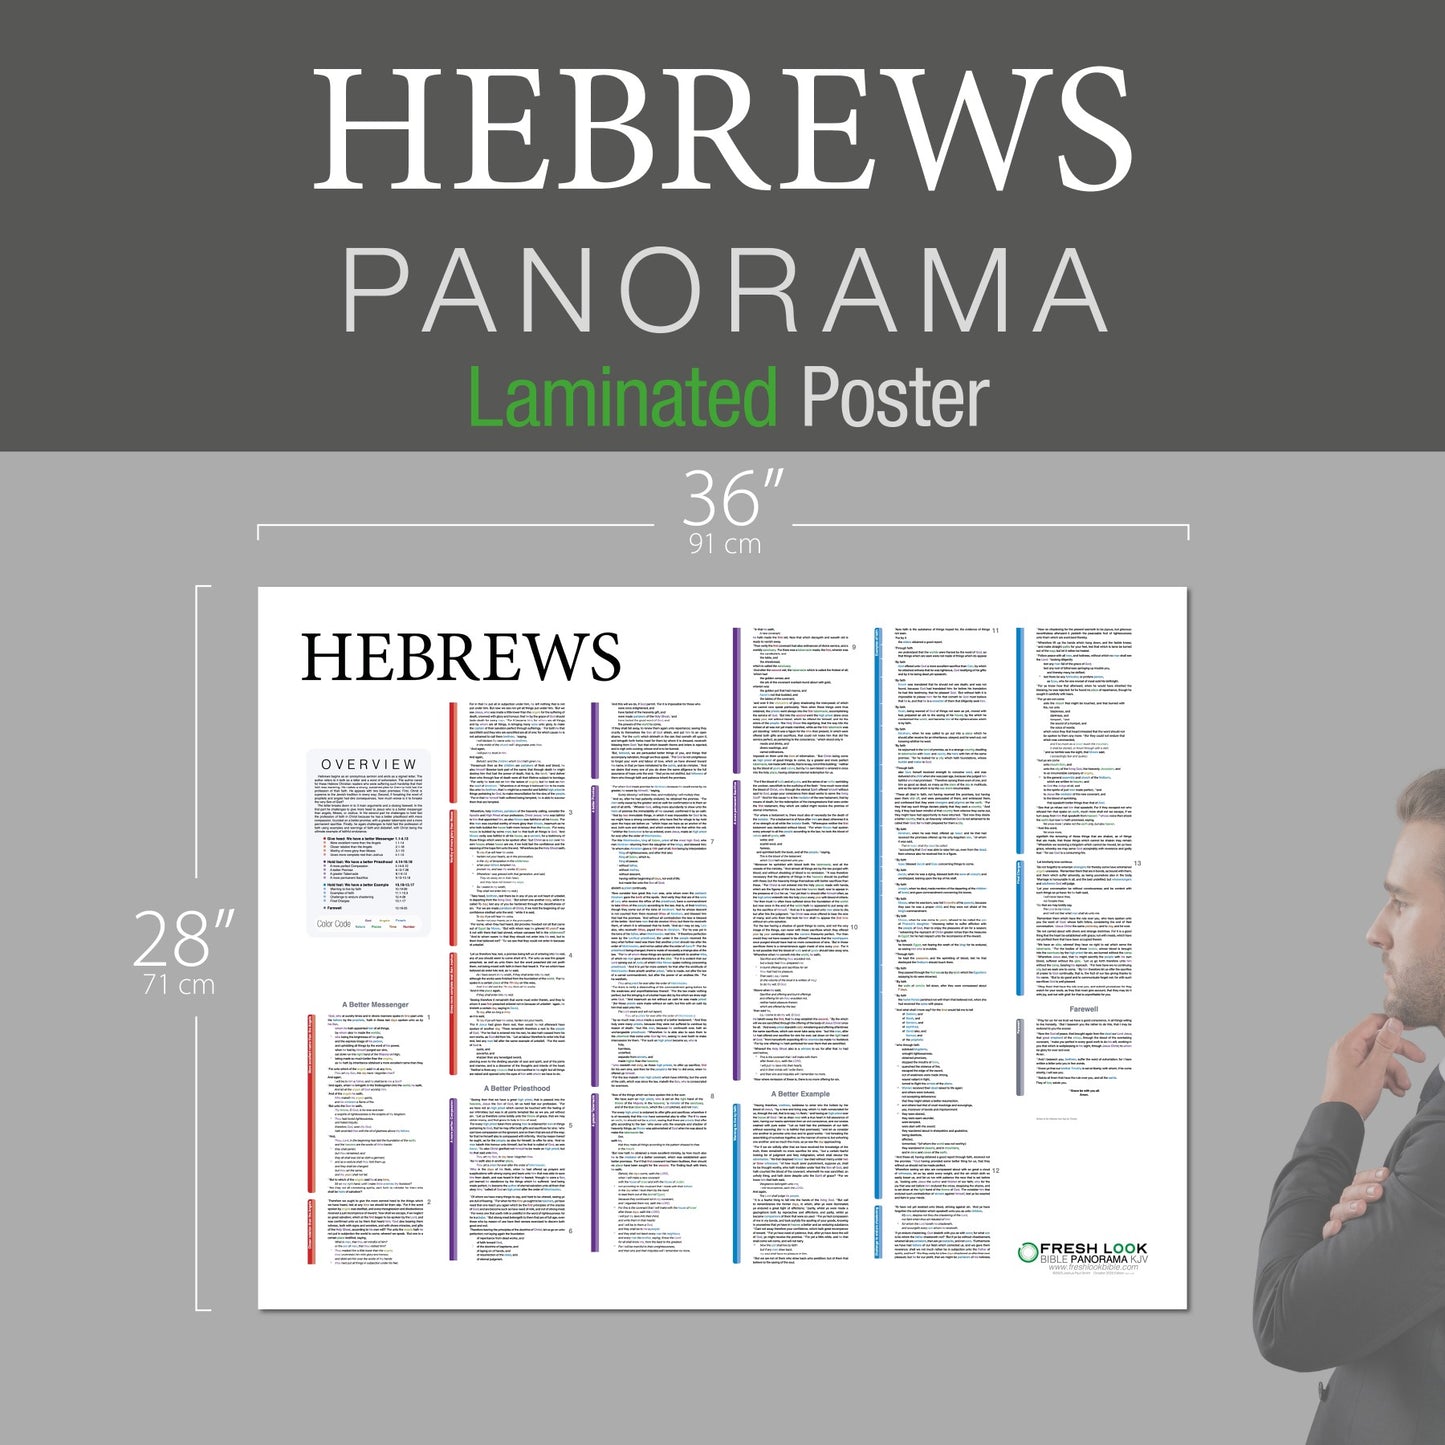 Hebrews Panorama Laminated